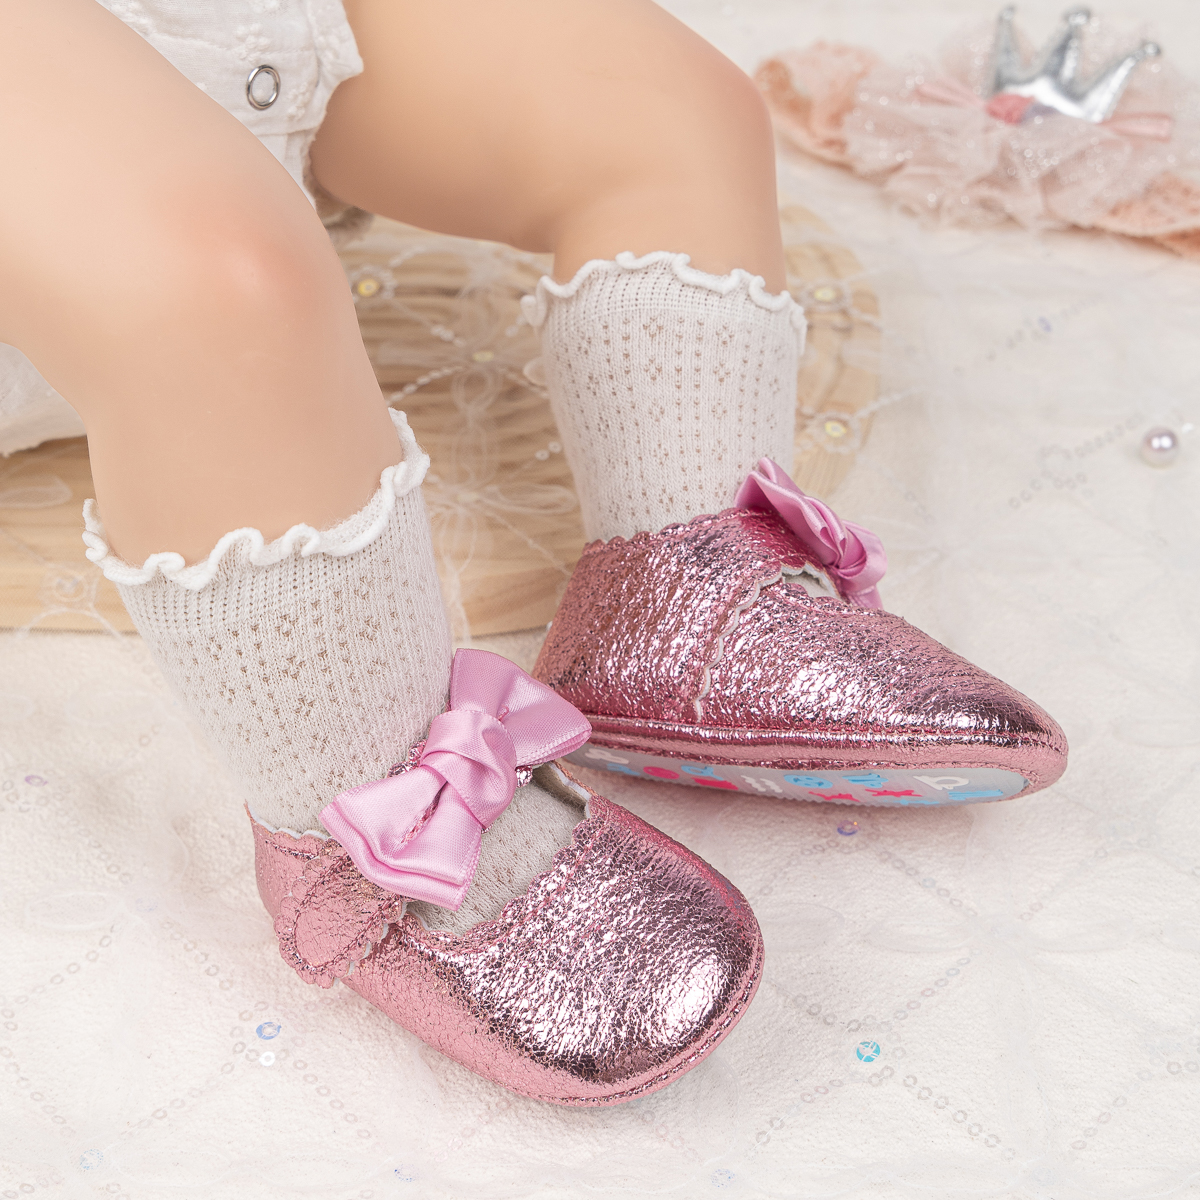 PU Upper PVC Anti-slip sole Baby Dress Shoes